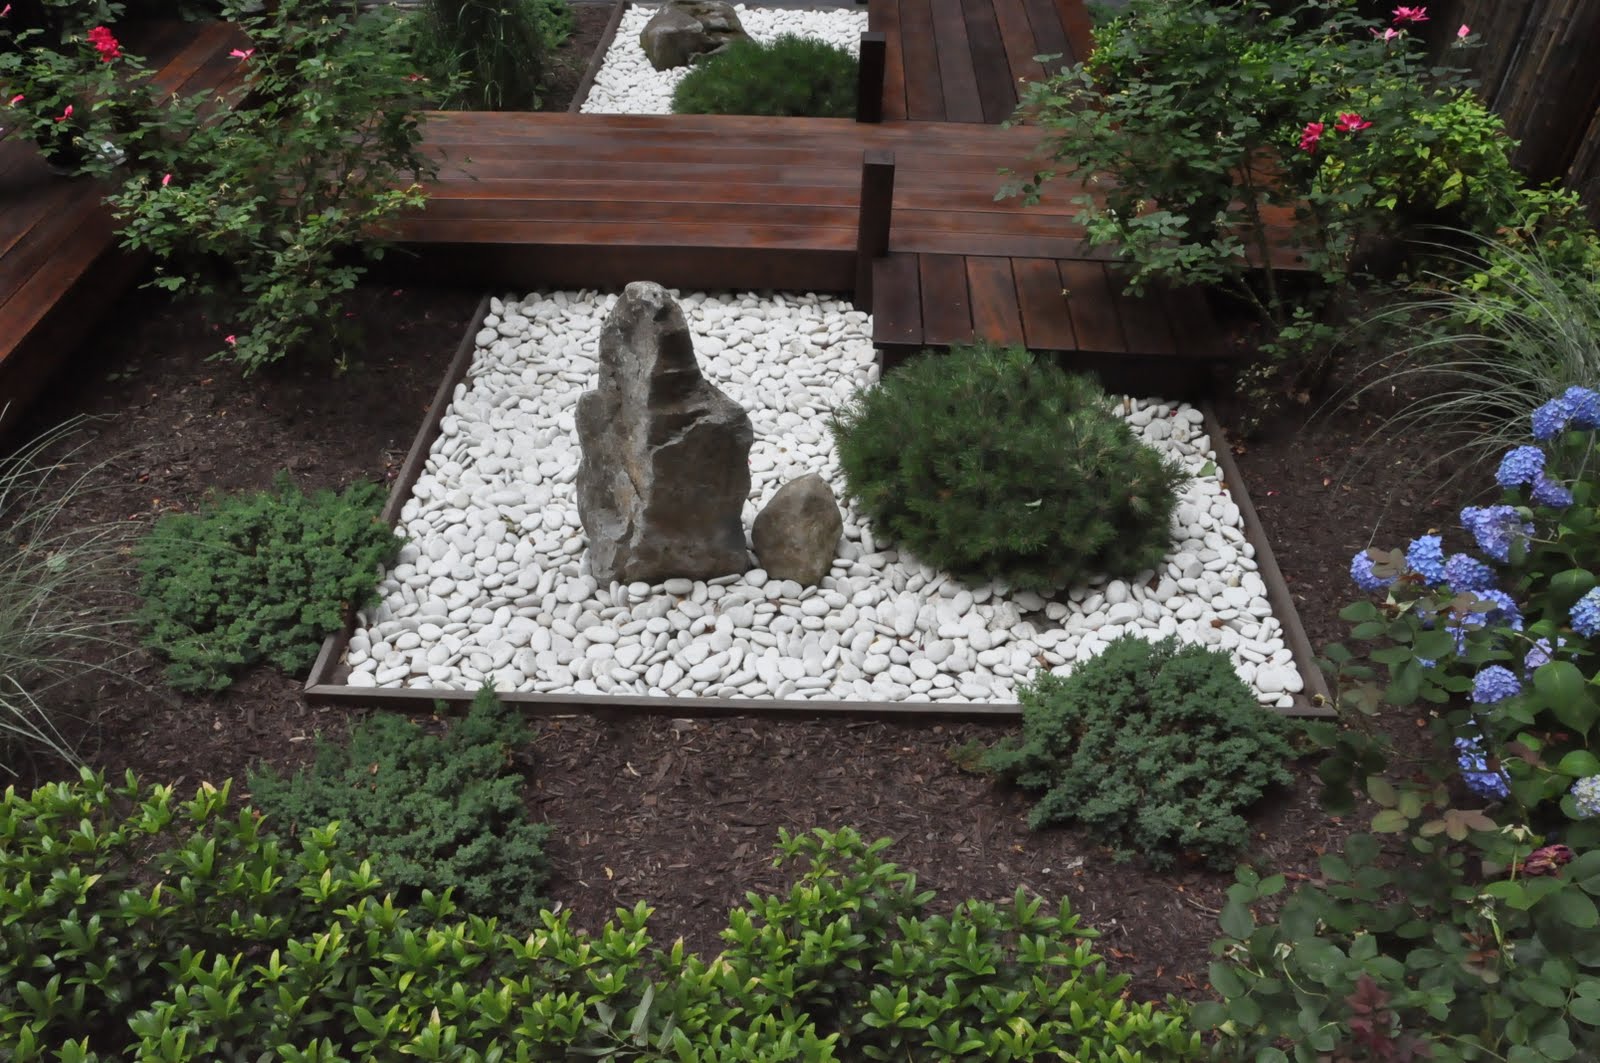 This small rock garden was influenced by Zen meditation gardens.